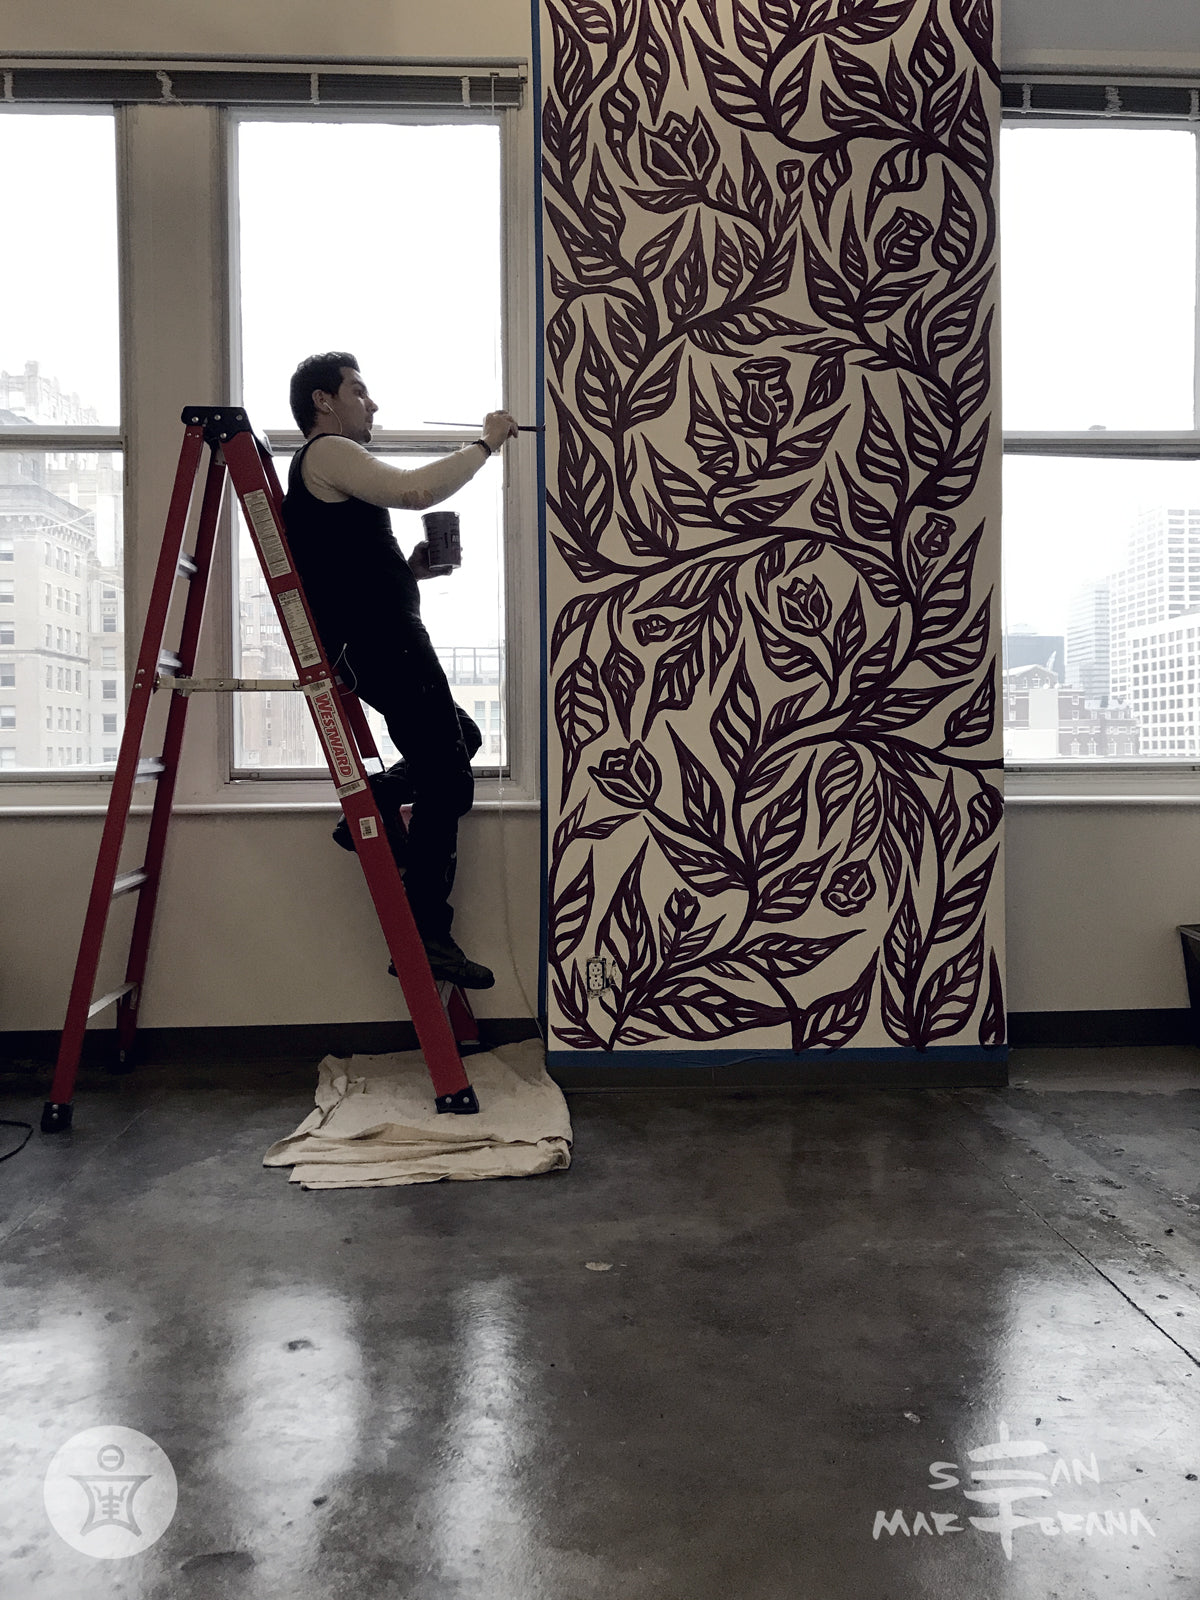 Sean Martorana painting and installing a Flourish Mural in Scribewise Philadelphia, PA